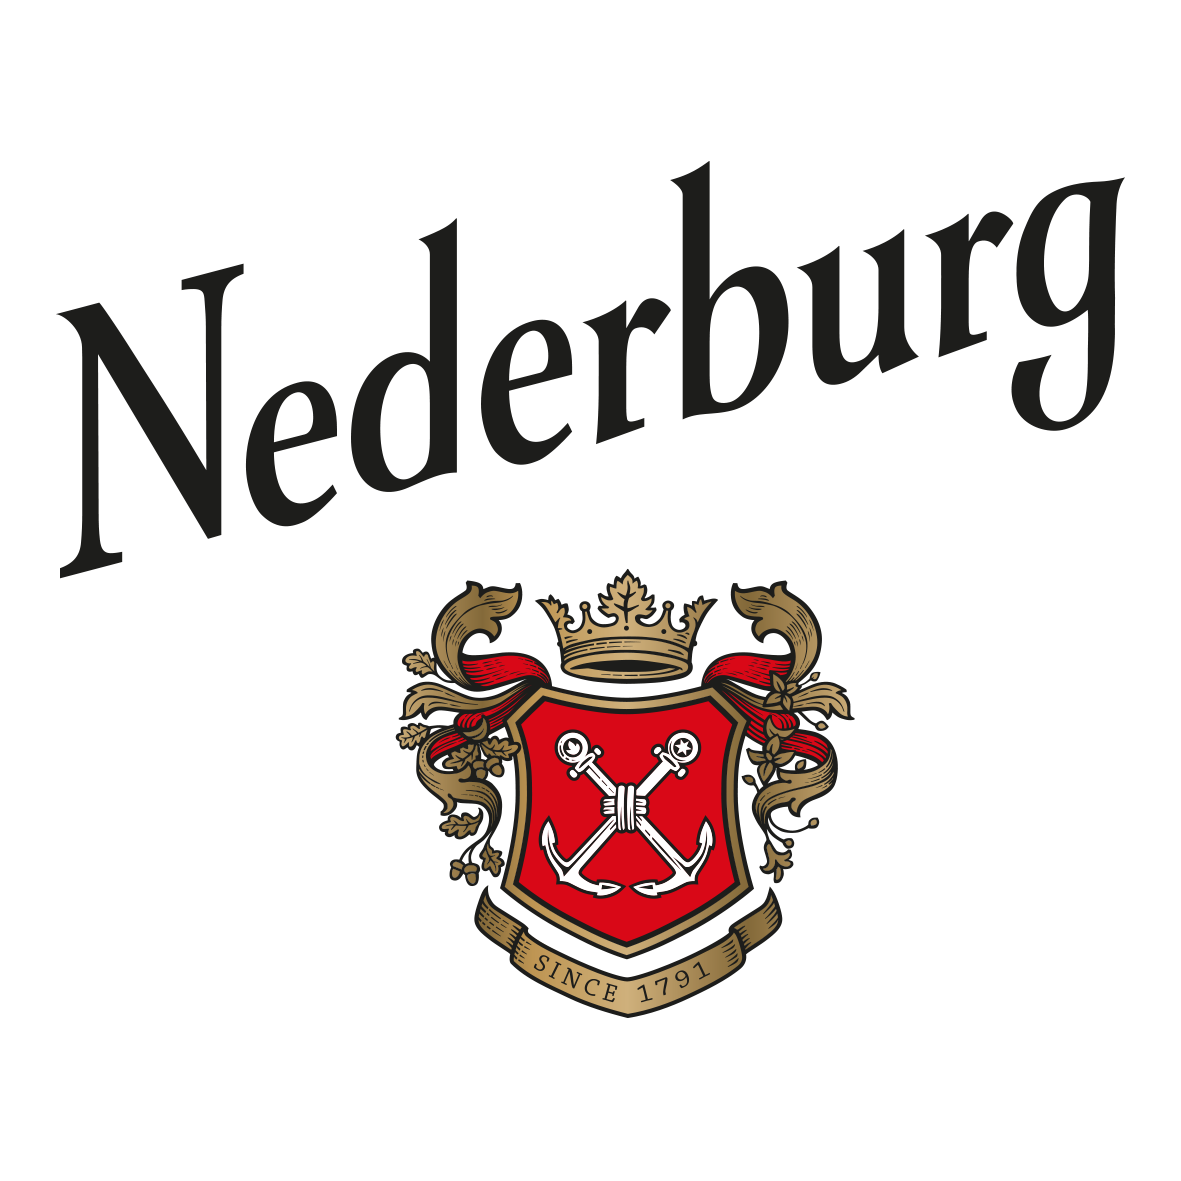 Nederburg logo